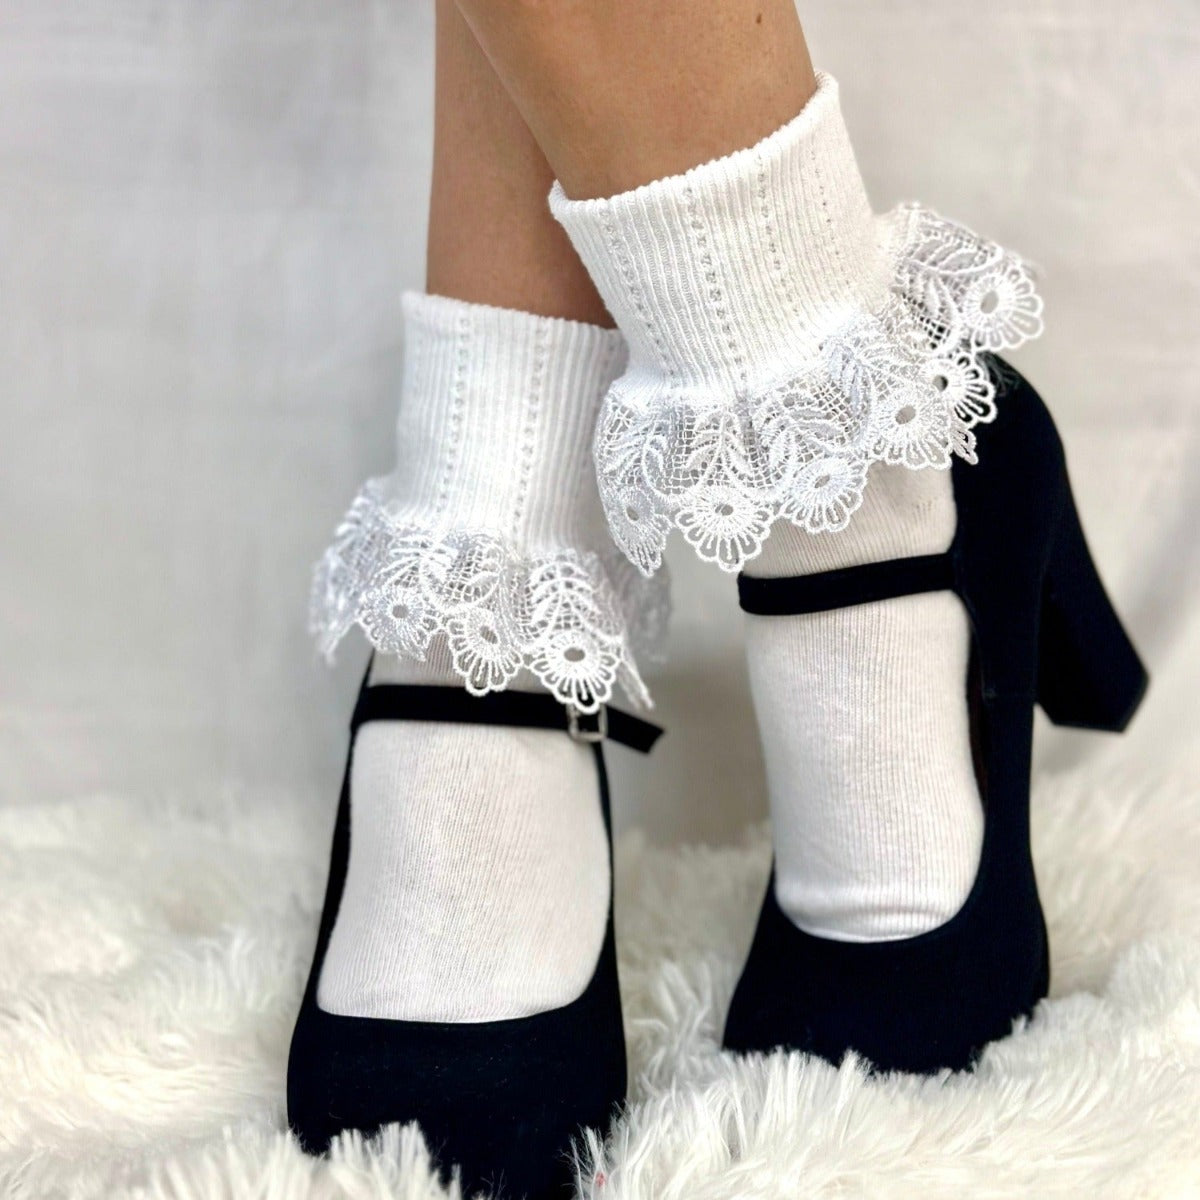 Blossom signature lace socks white quality fashion hosiery , Catherine Cole , lace trim socks near me, best quality, amazon.